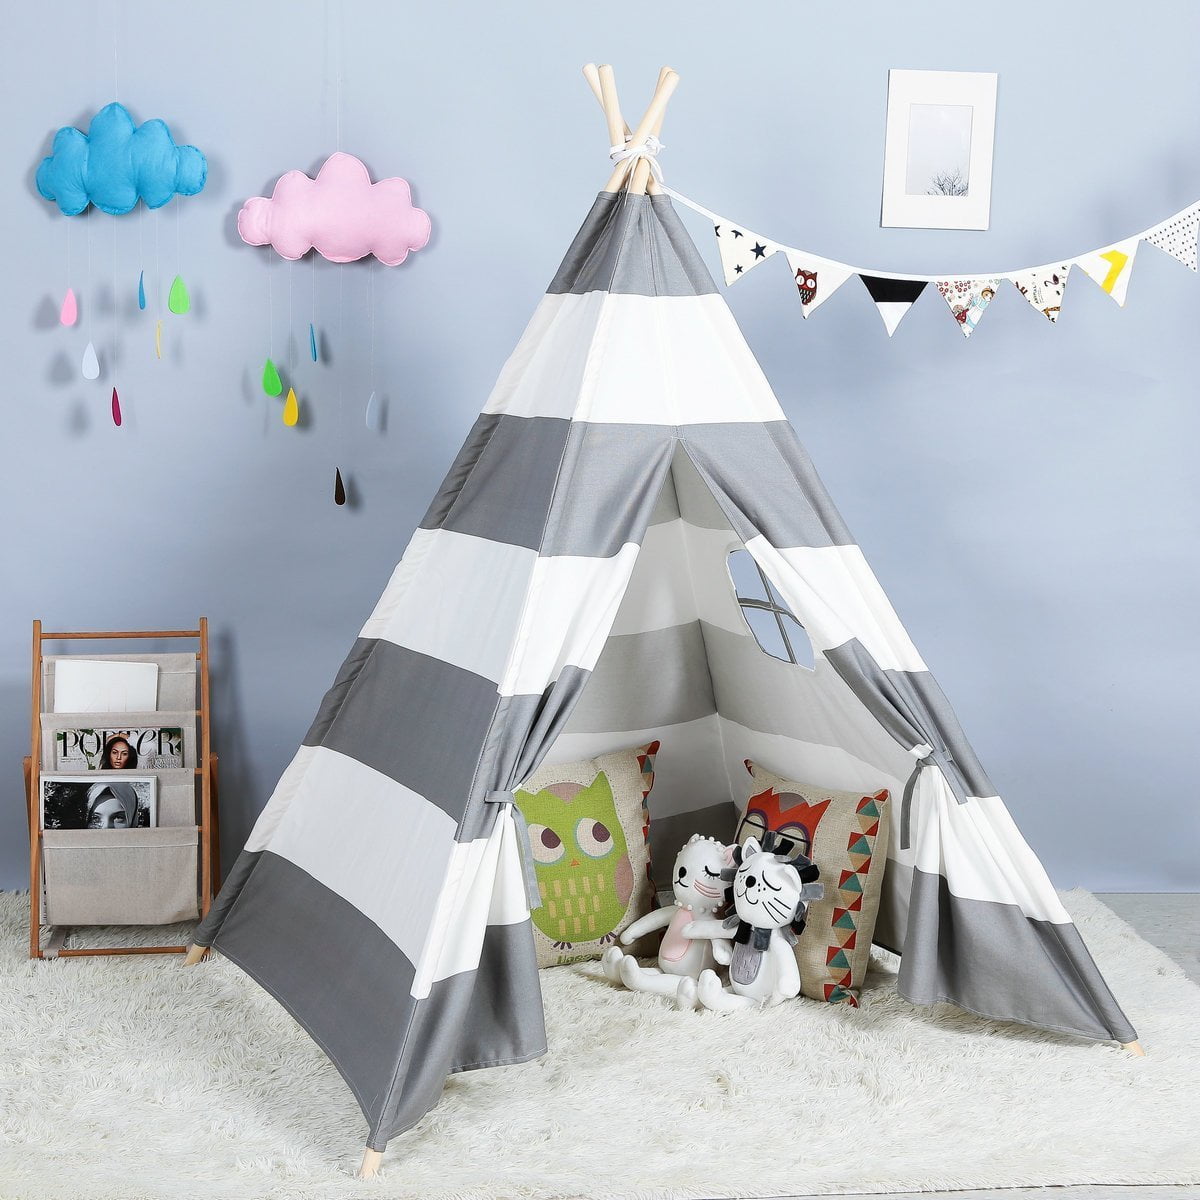 DalosDream Teepee Tent for Kids-100% Natural Cotton Canvas Children Tent-Grey Striped 